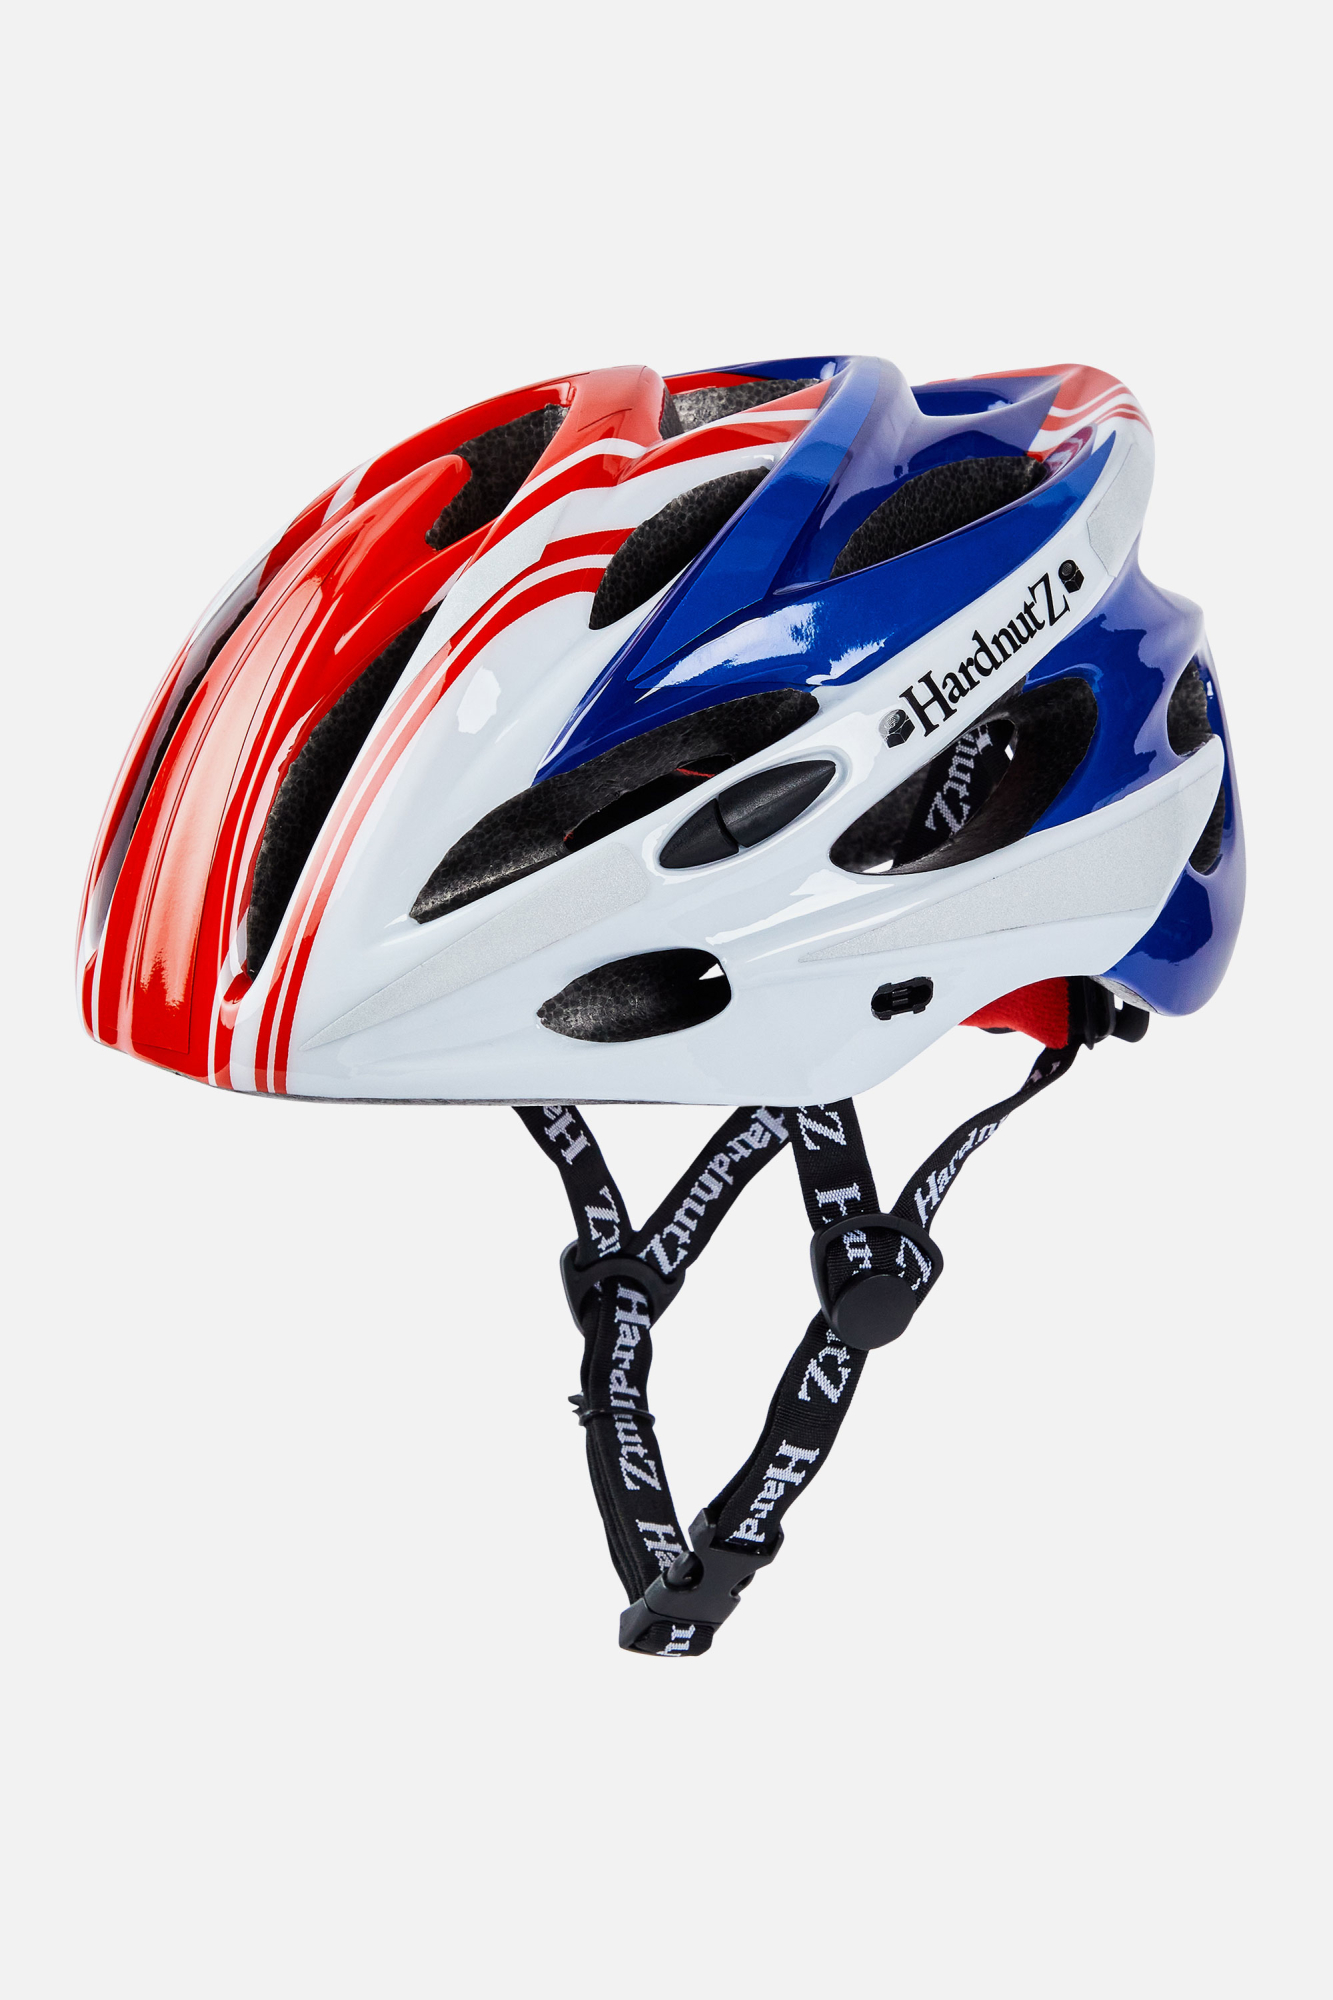 Hardnutz Unisex Cycle Helmet Red - Size: 54-61